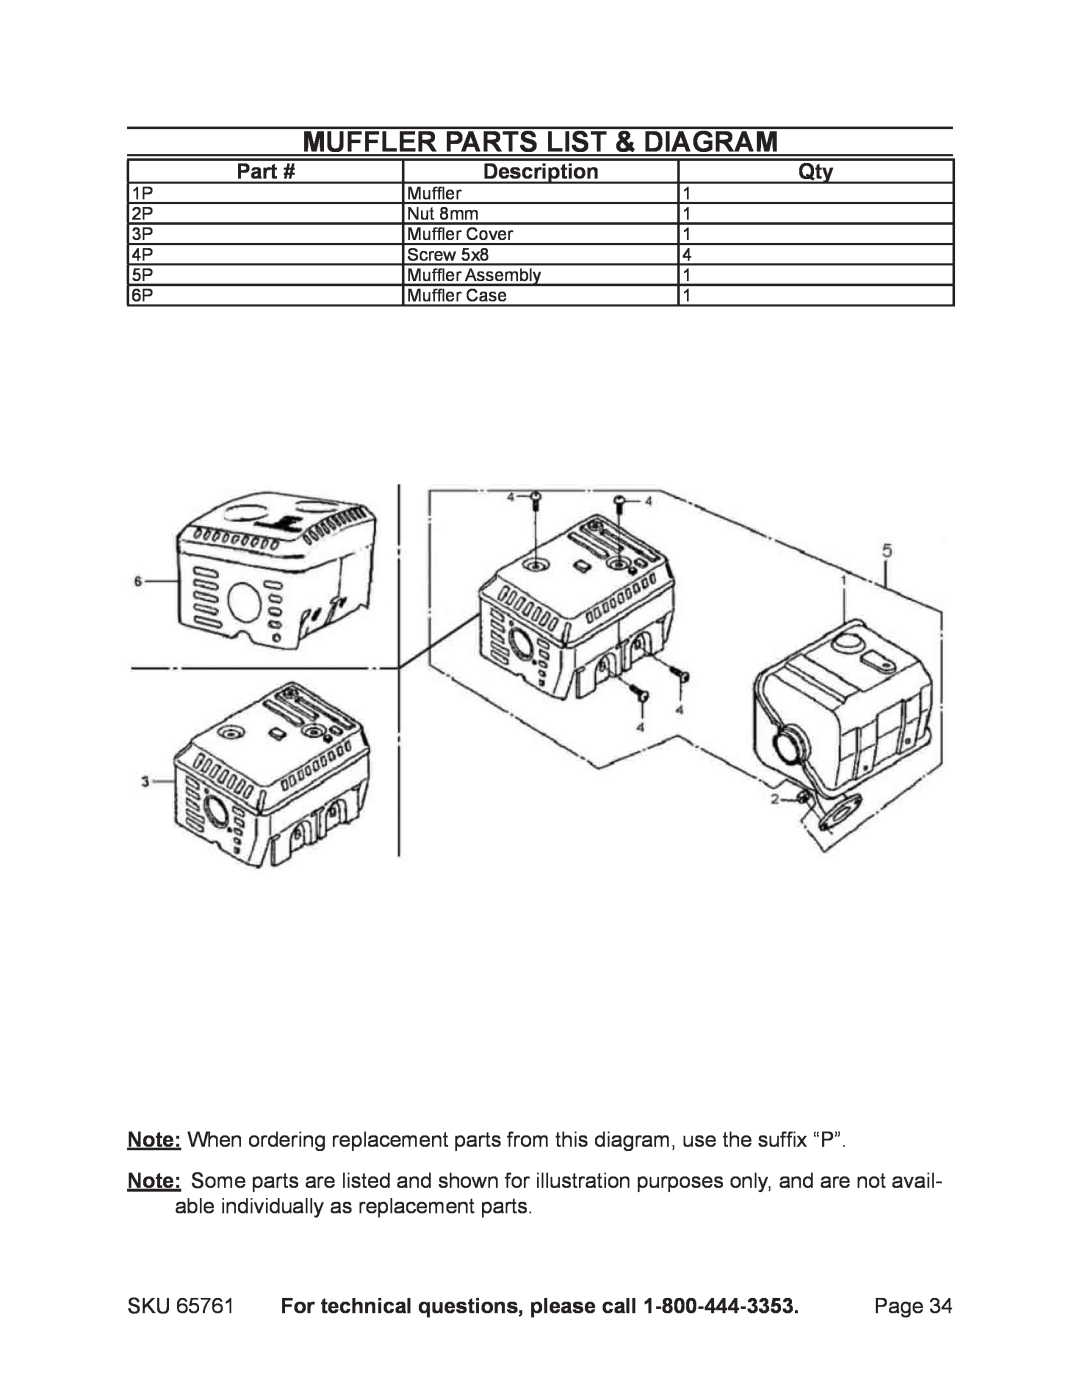 Harbor Freight Tools 65761 manual Muffler parts list & diagram, Description, For technical questions, please call 